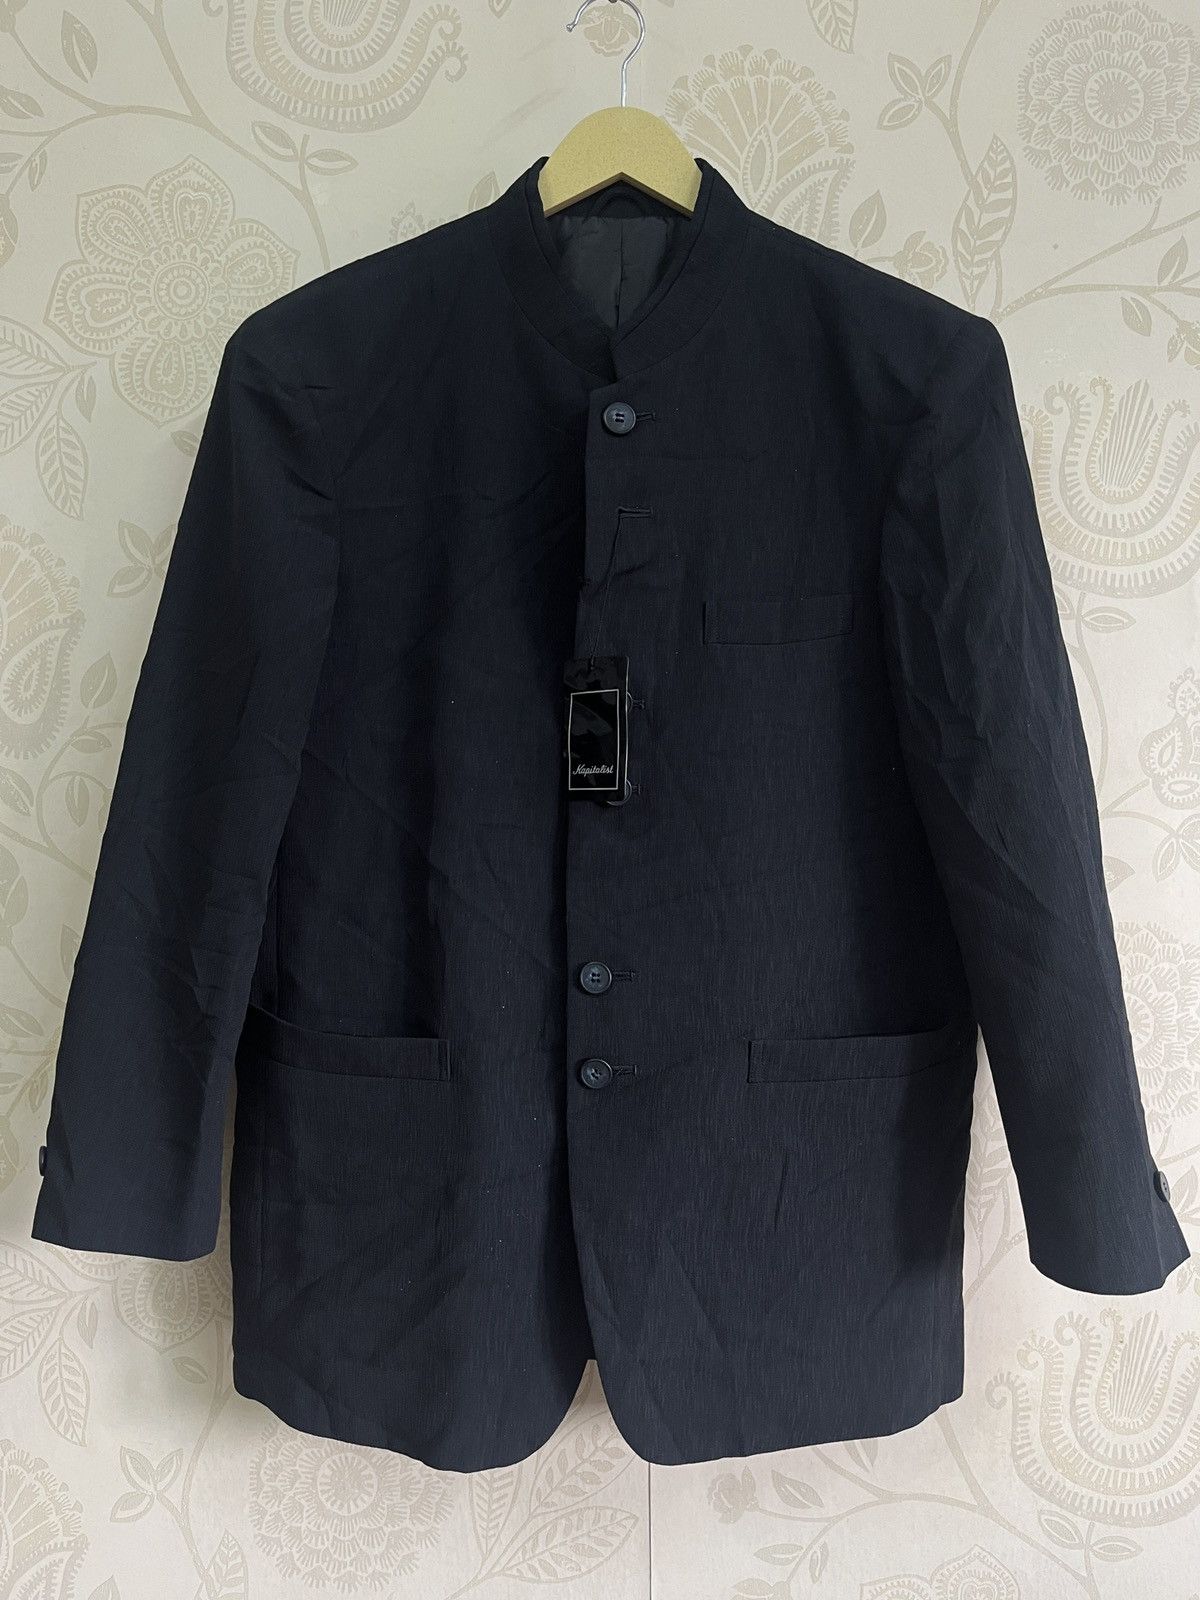 Grails Vintage Kapitalist Blazer Coat Jacket - 1